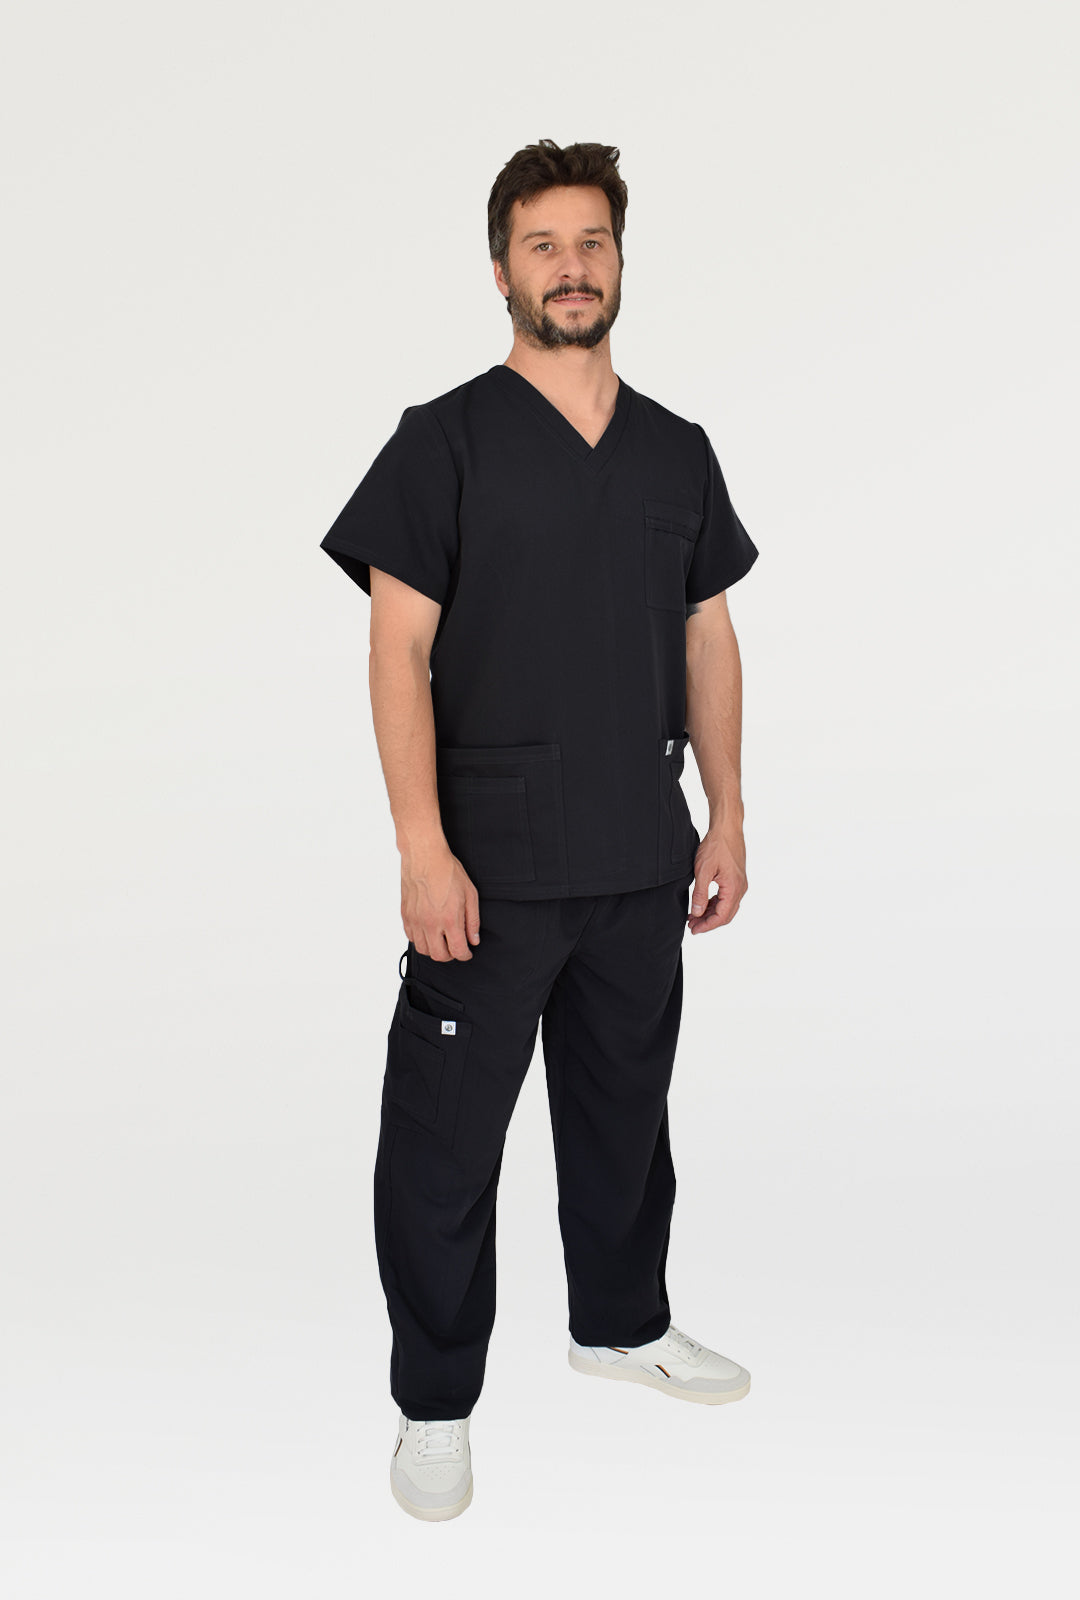 uniforme medico negro